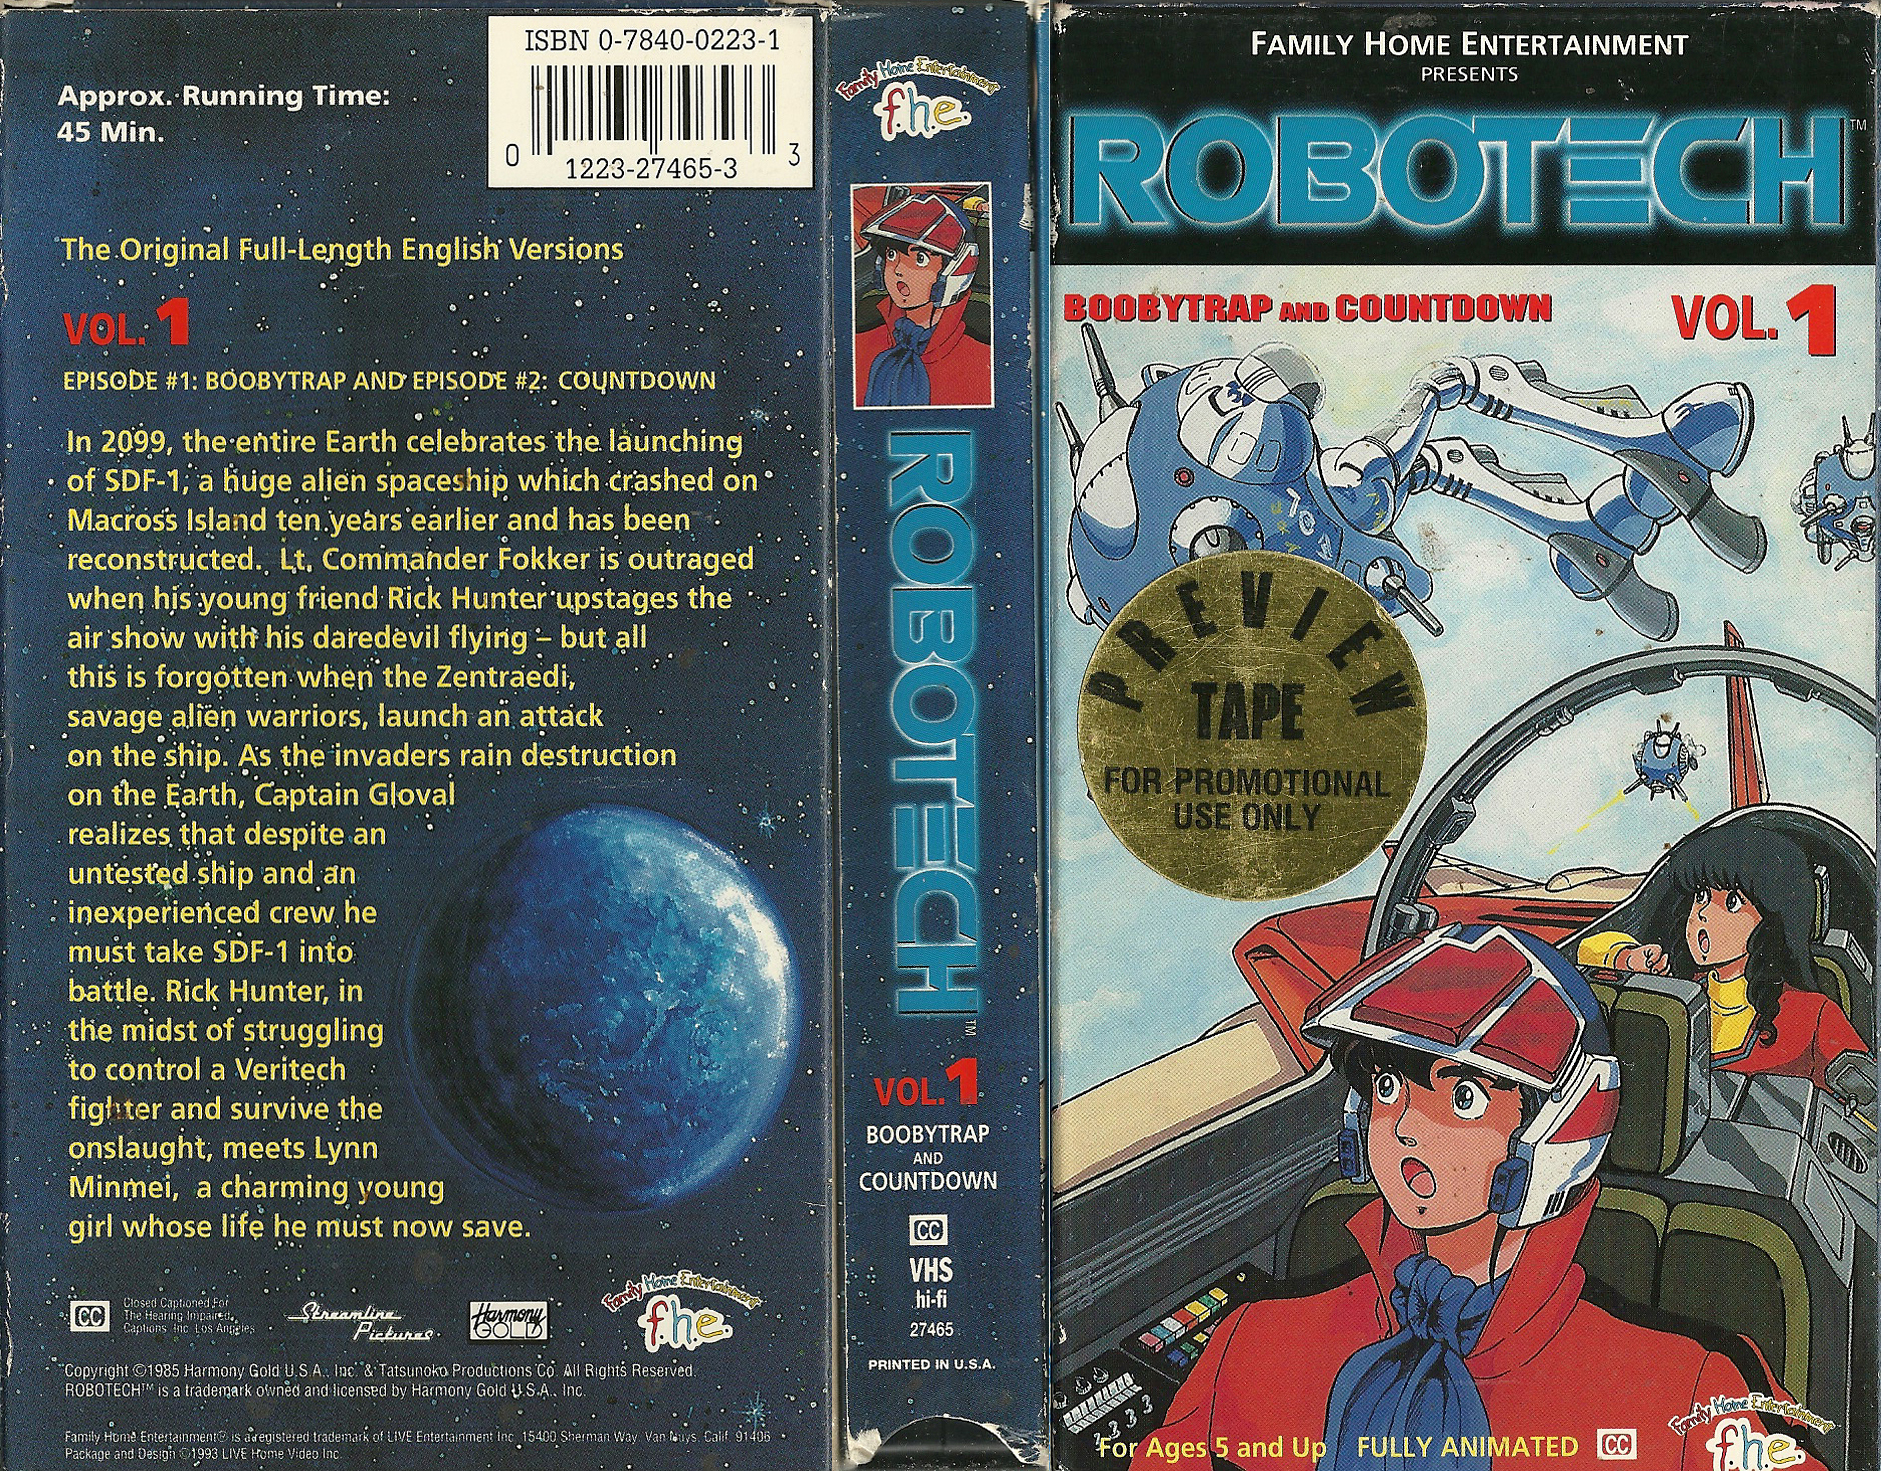 ROBOTECH-VOLUME-1.jpg